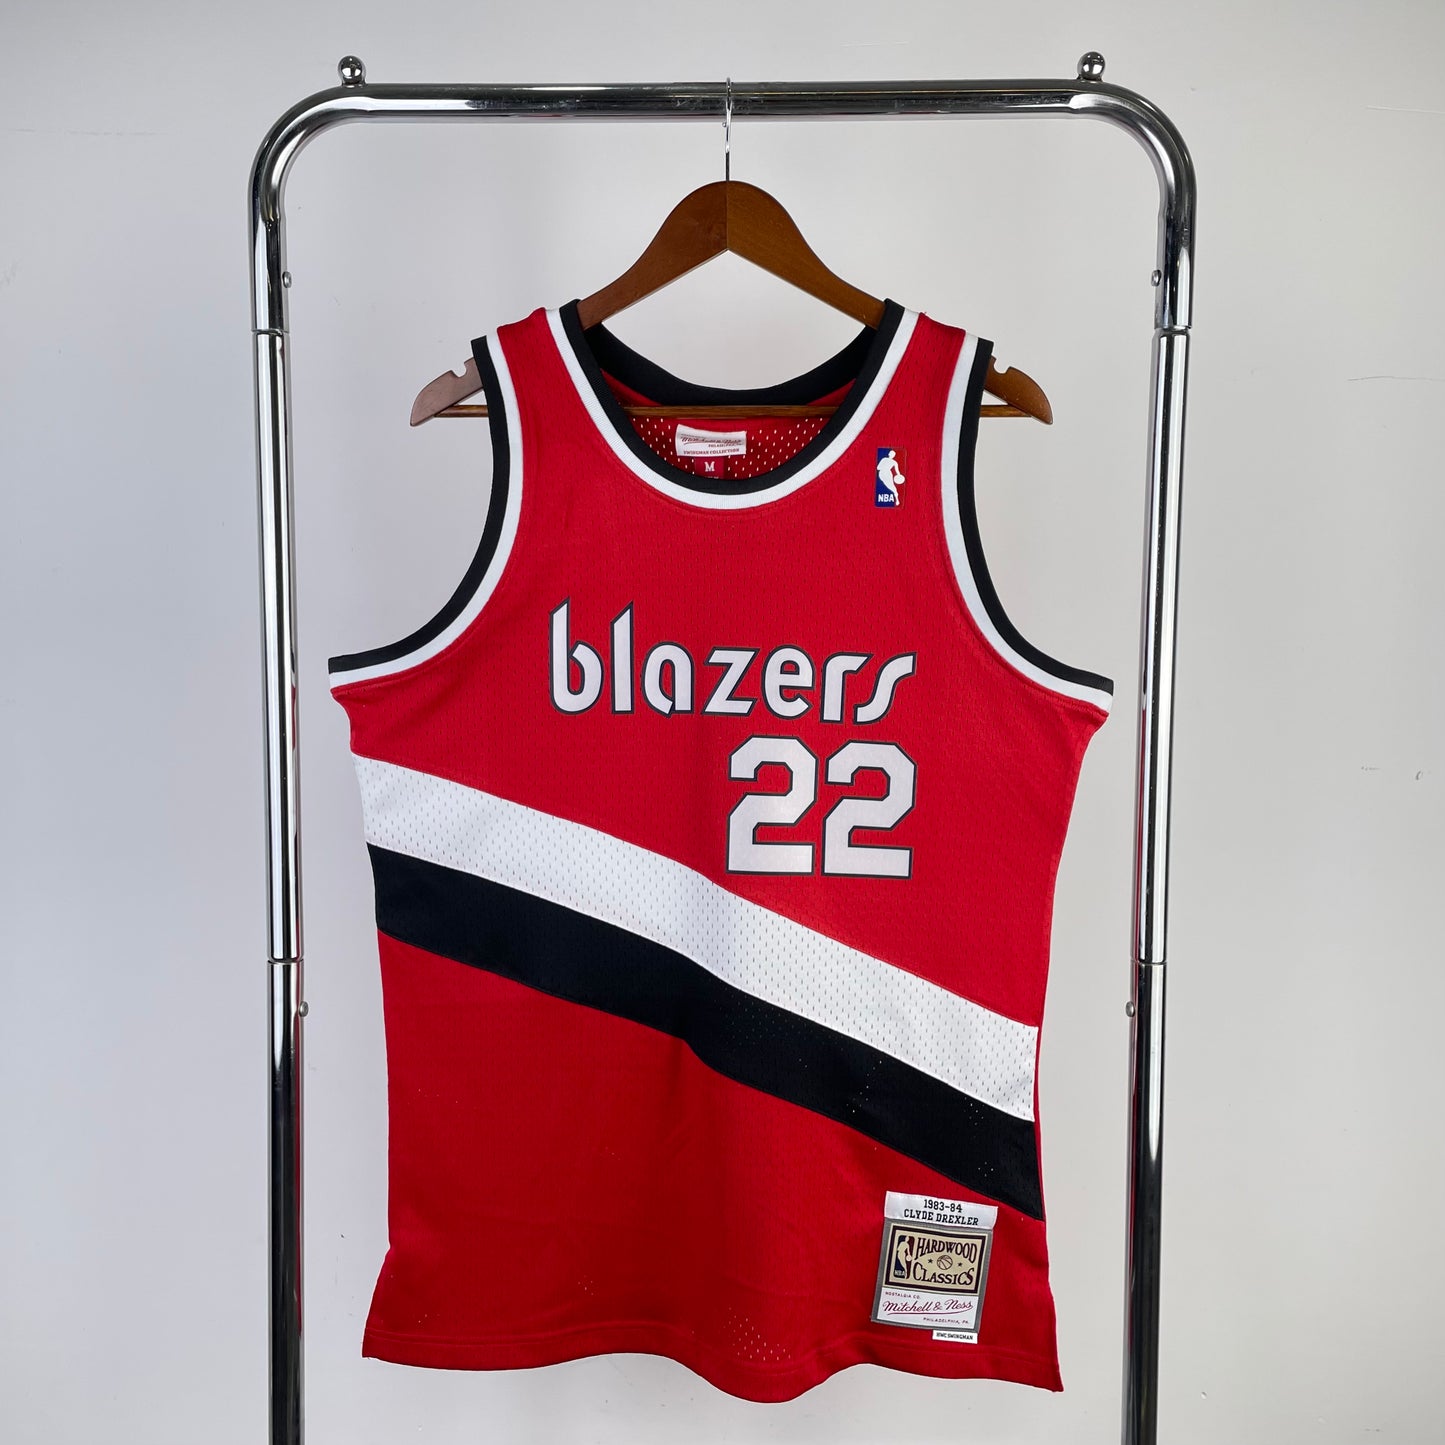 Clyde Drexler Portland Trail Blazers NBA 1983/84 Mitchell & Ness Rookie Red Jersey